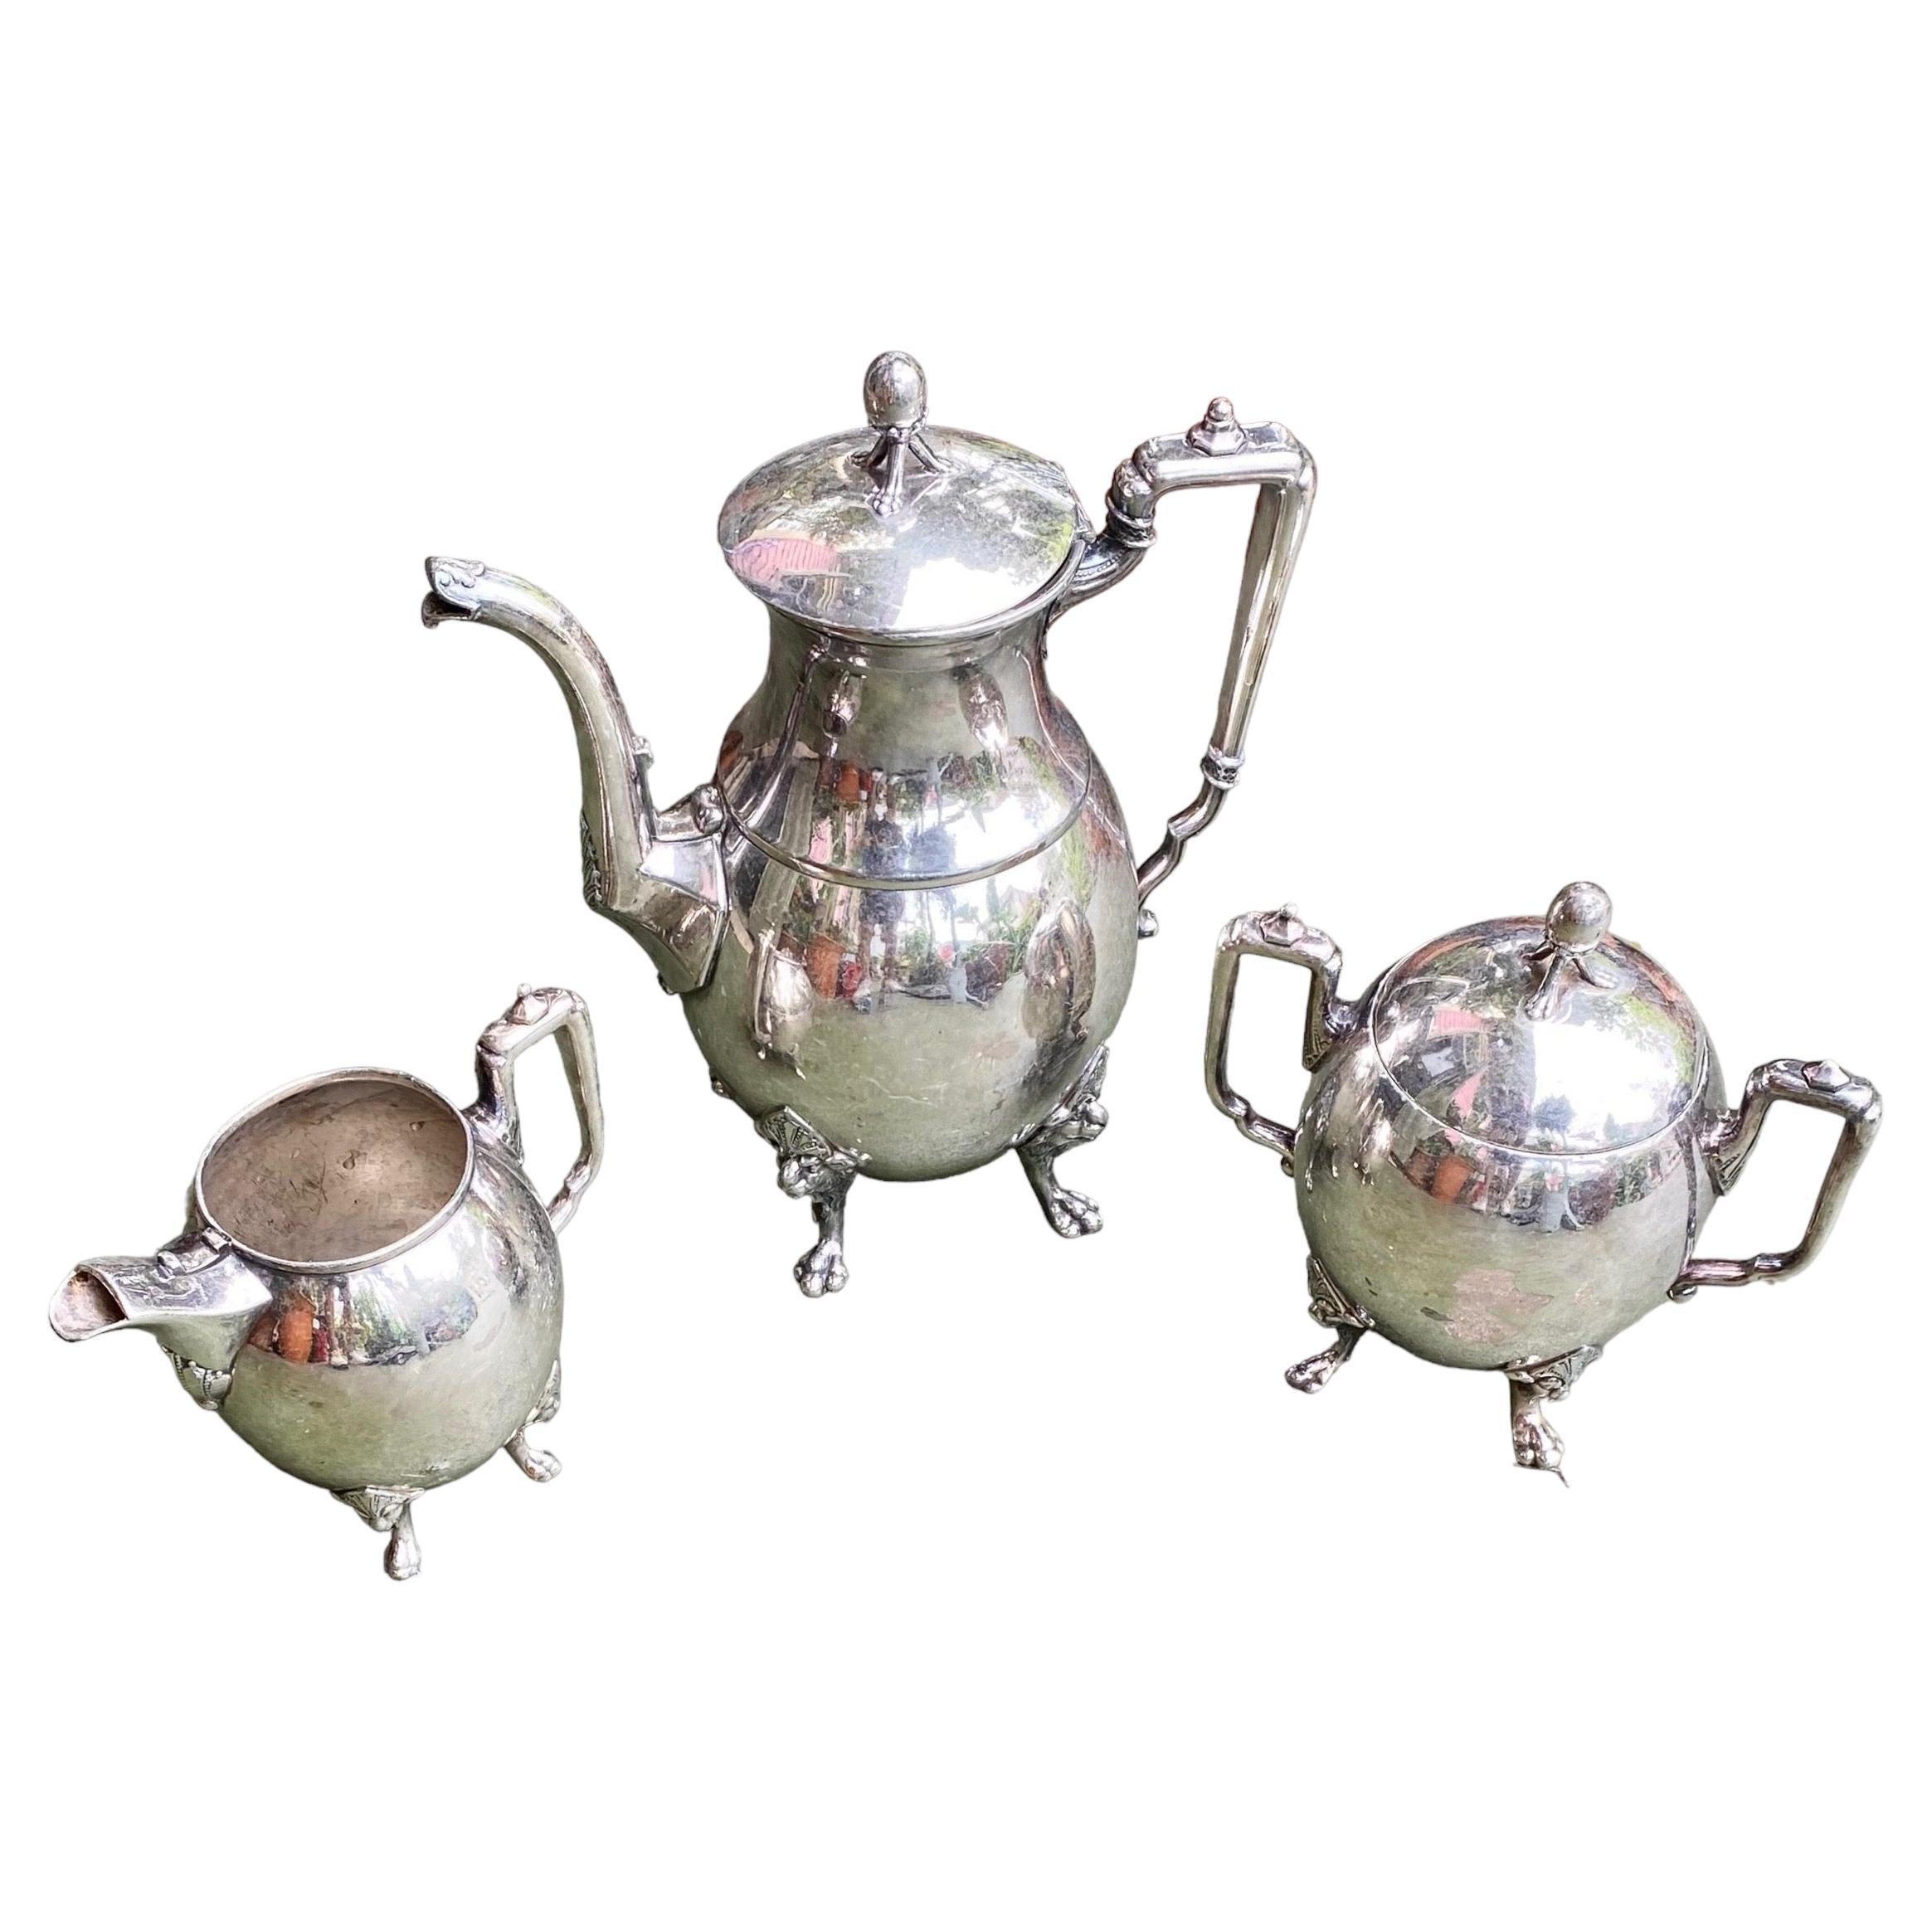 https://a.1stdibscdn.com/vintage-taunton-silver-plated-art-deco-tea-service-for-sale/f_66282/f_341718221683513553882/f_34171822_1683513554568_bg_processed.jpg